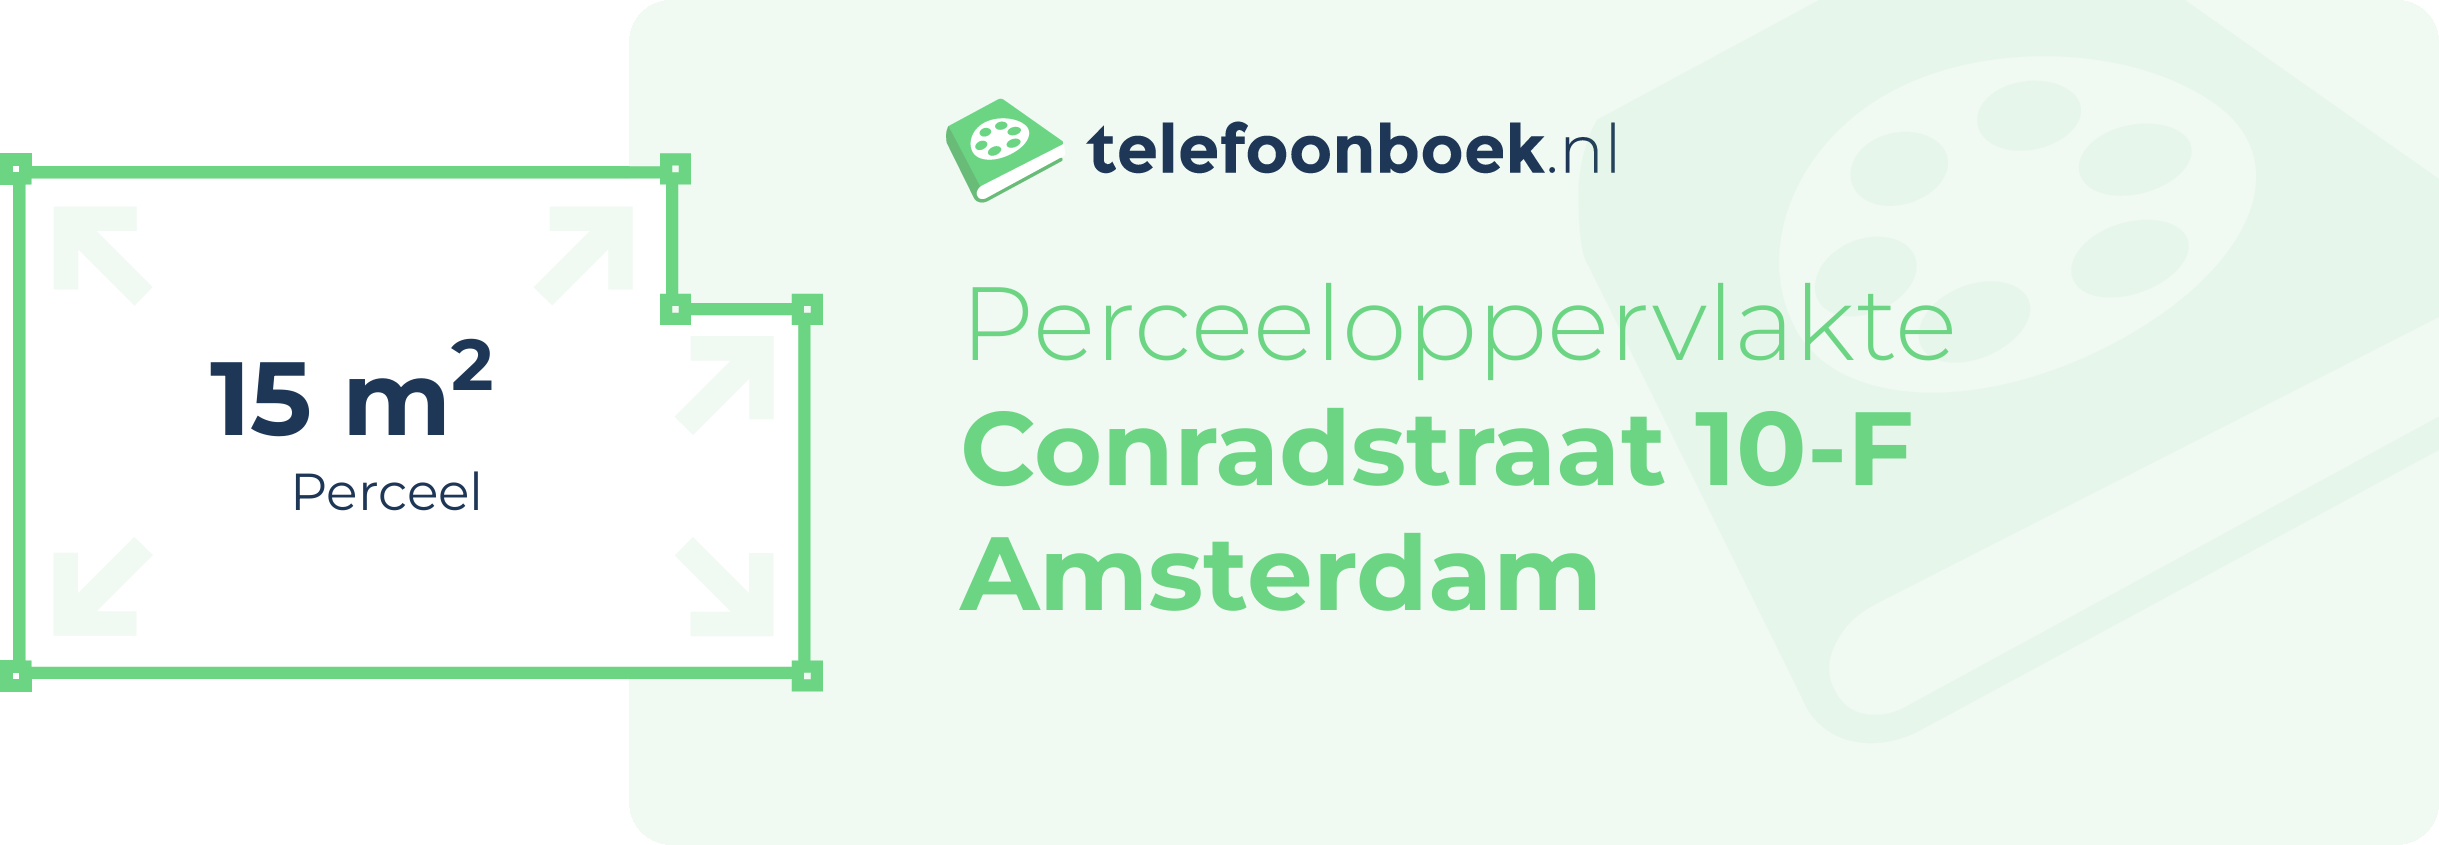 Perceeloppervlakte Conradstraat 10-F Amsterdam